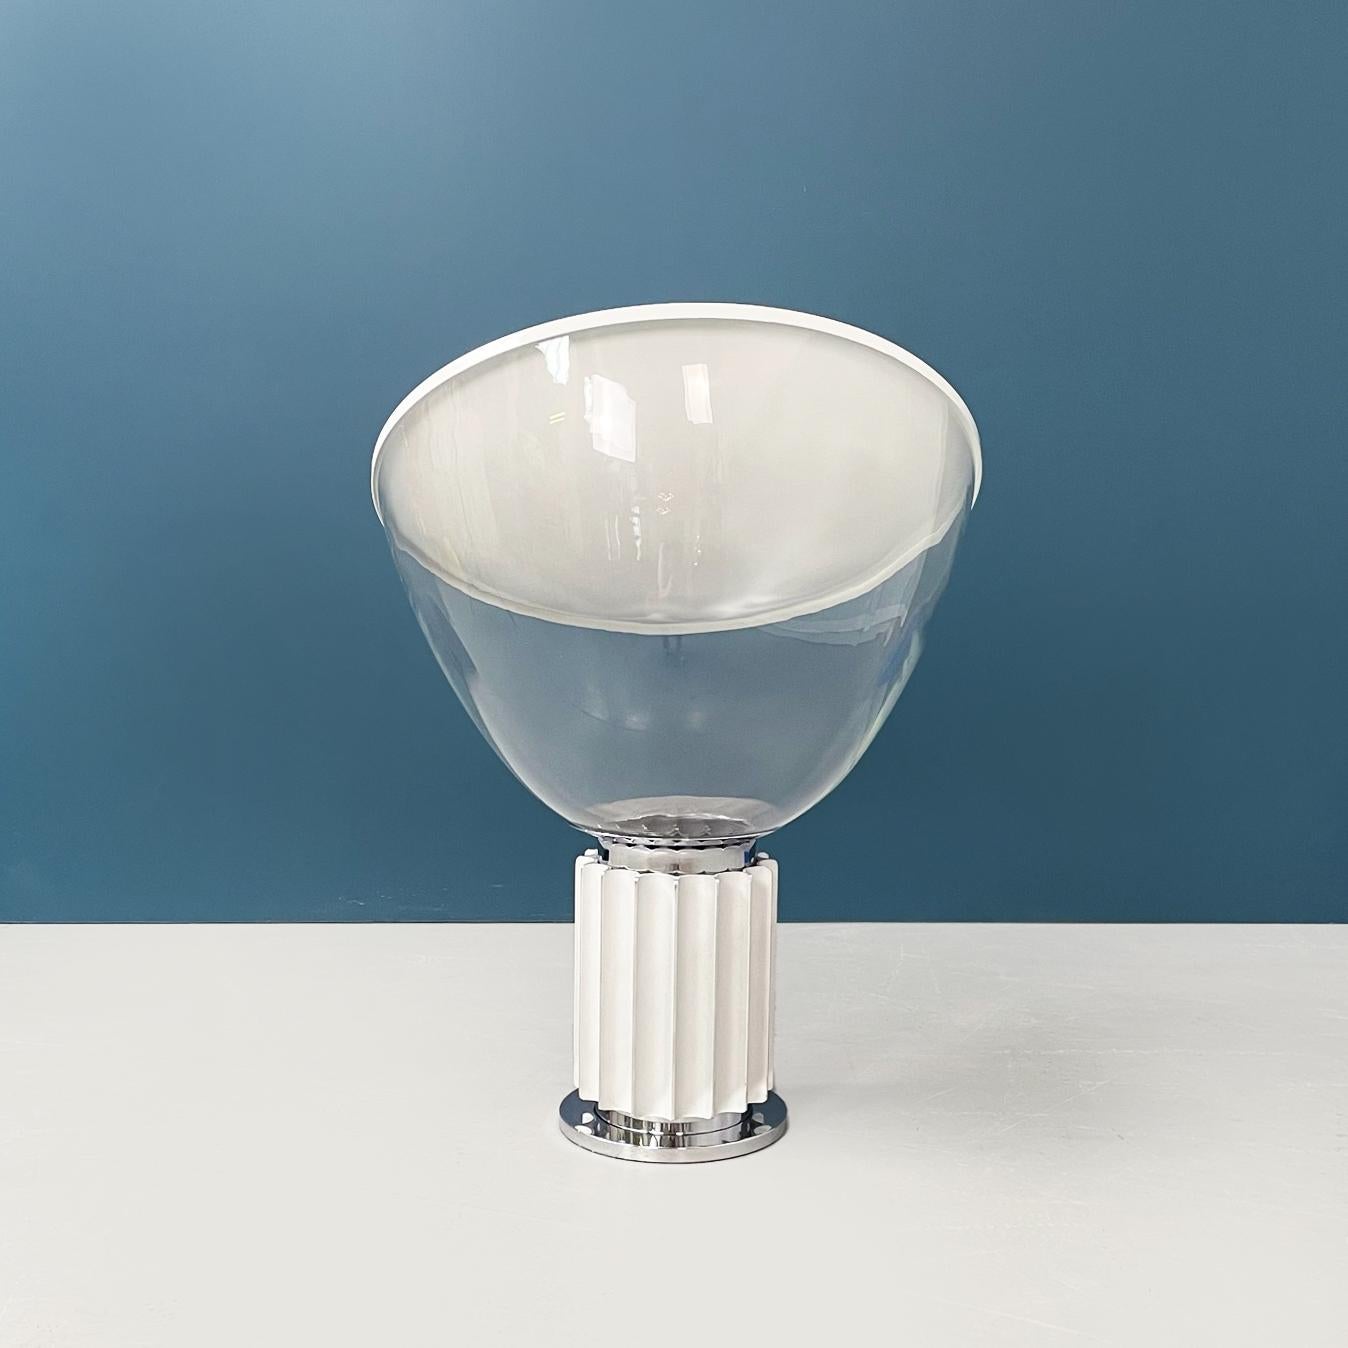 Mid-20th Century Italian White Taccia Lamp by Achille and Pier Giacomo Castiglioni for Flos, 1962